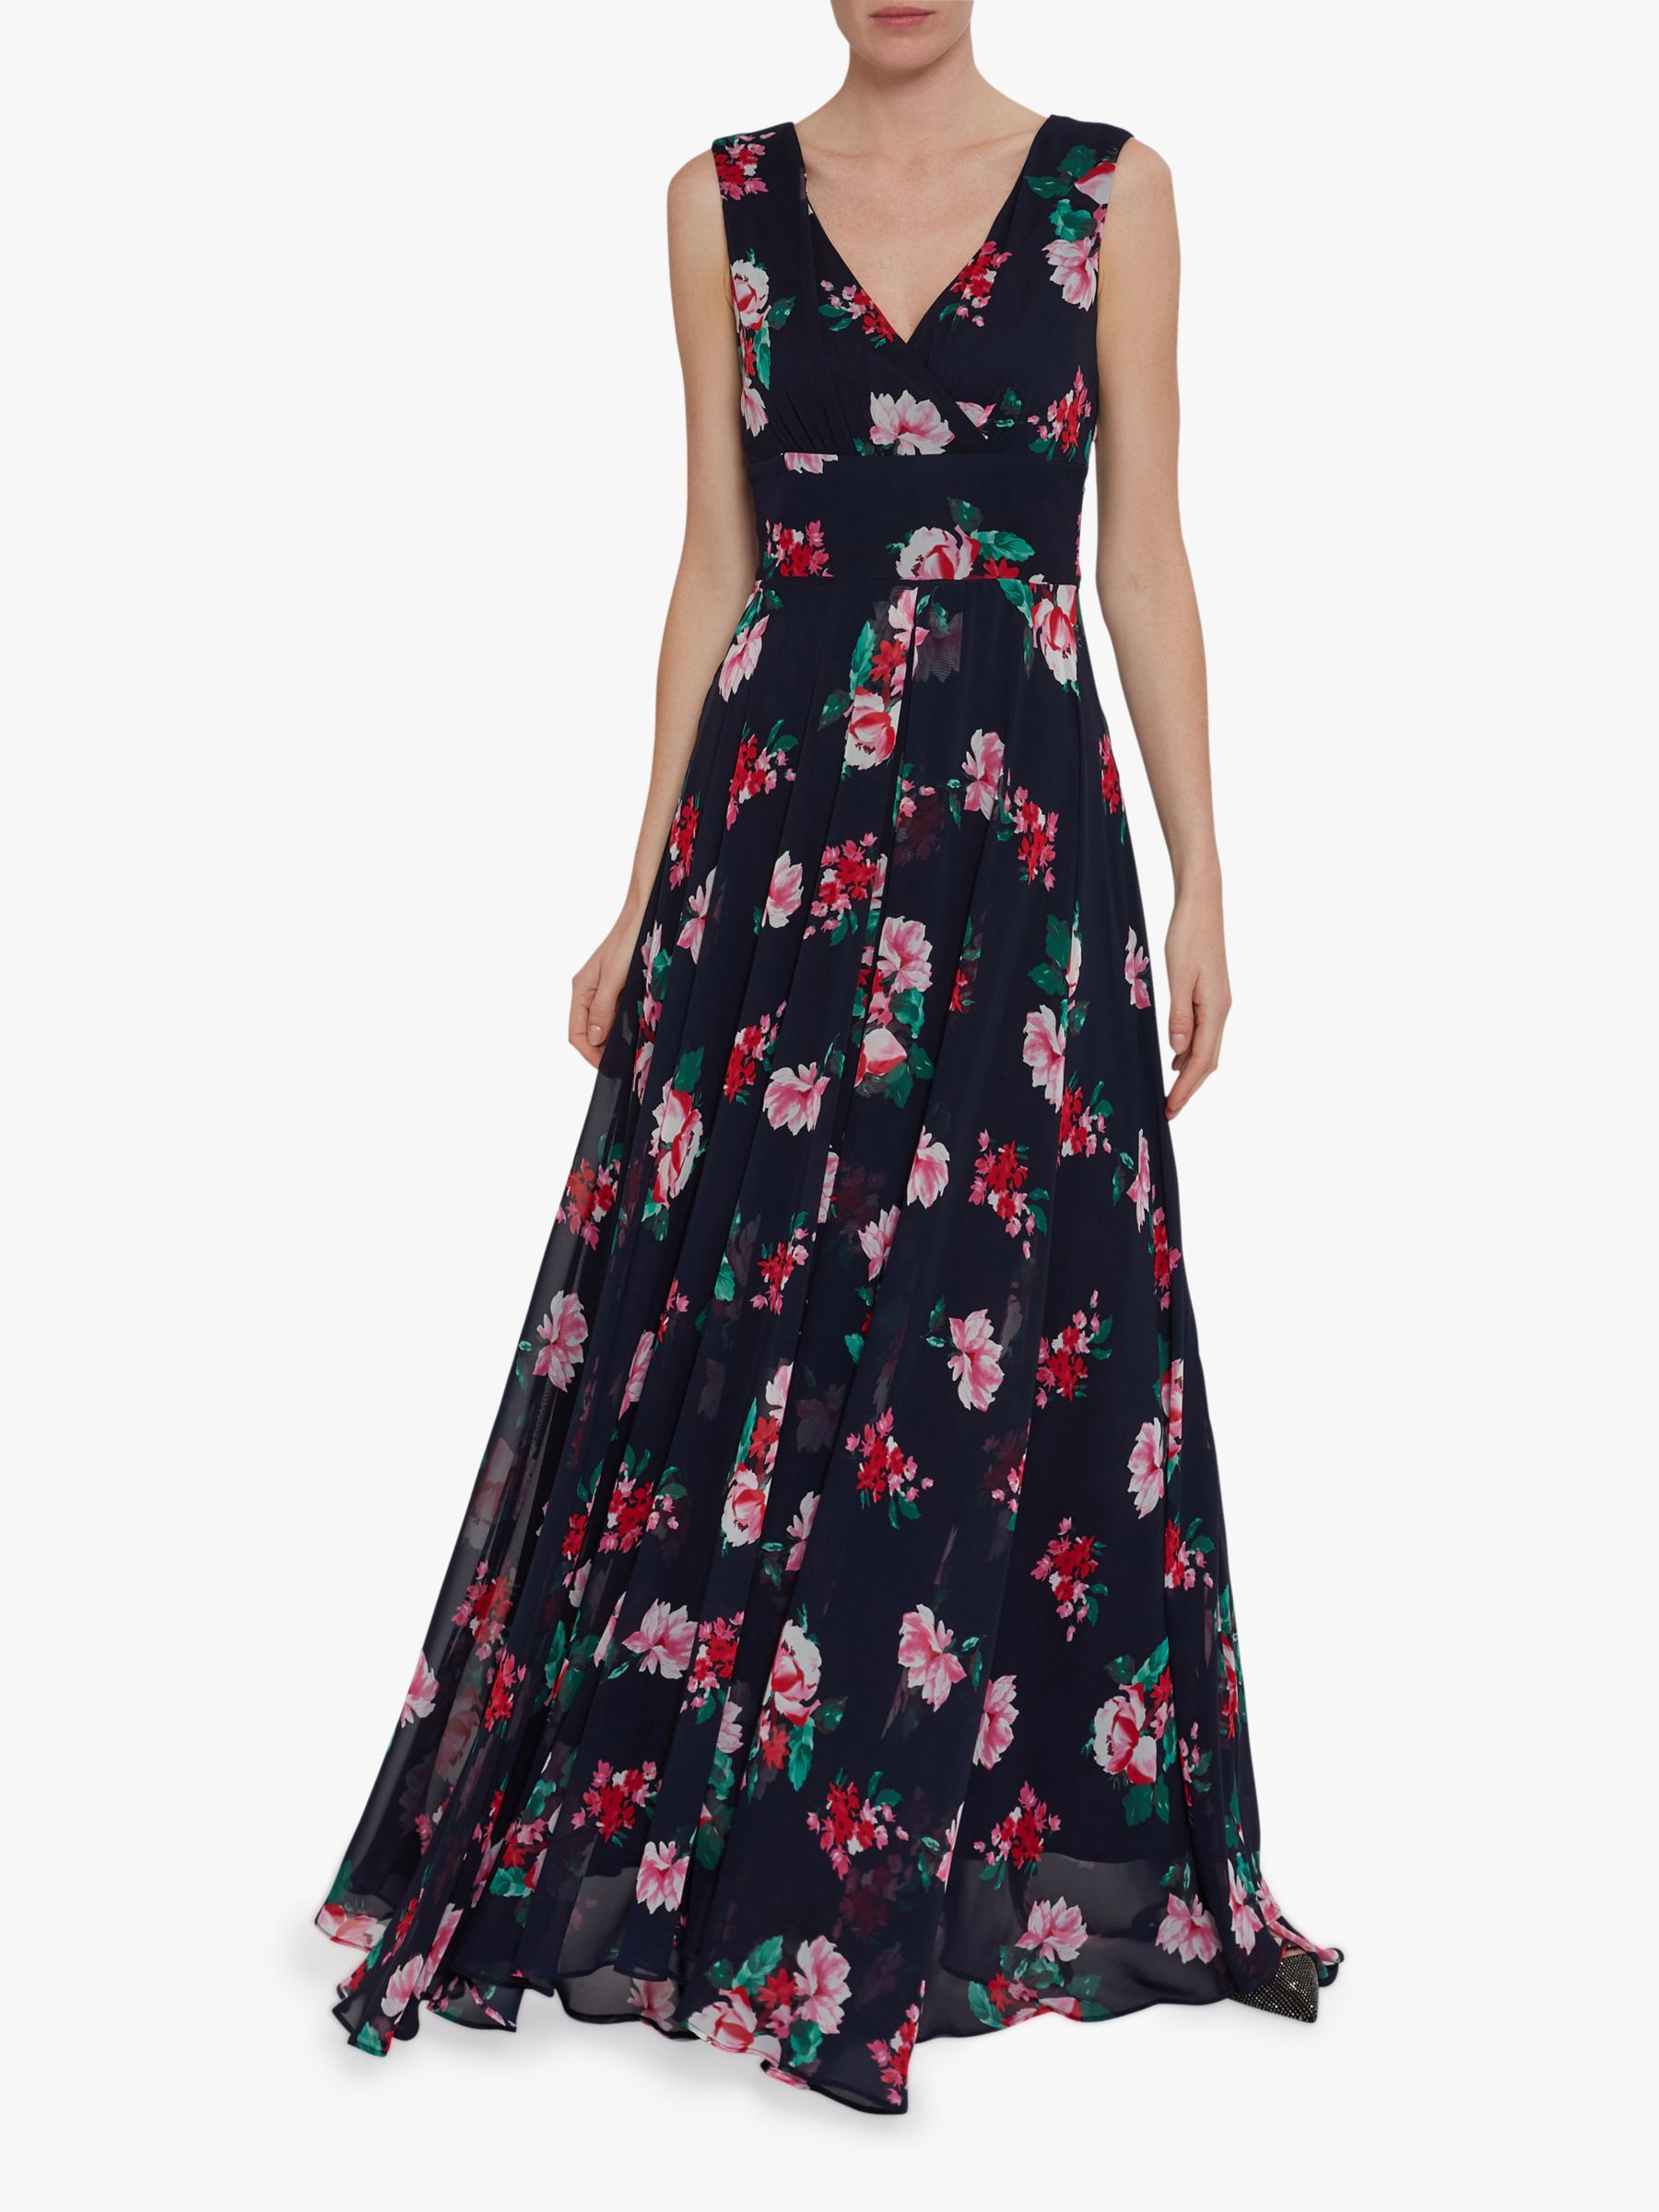 Gina Bacconi Edana Floral Maxi Dress, Black/Multi